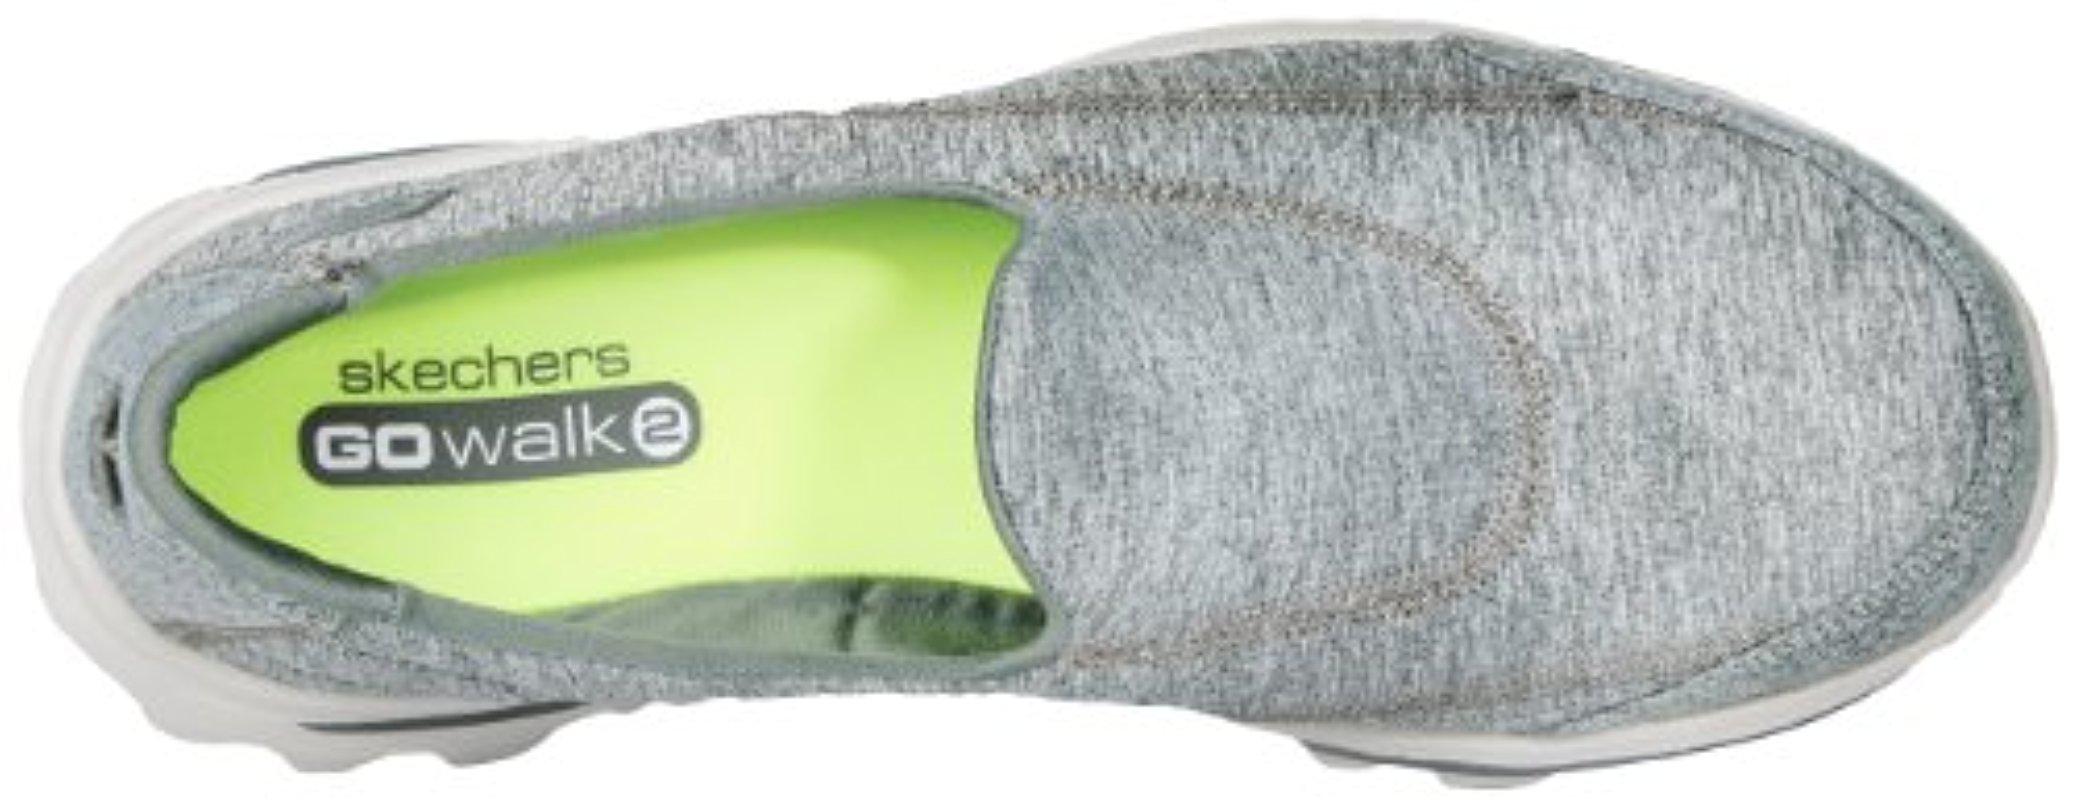 Skechers Synthetic Performance Go Walk 2 Slip-on Walking Shoe in Heather  Grey (Gray) - Save 52% | Lyst